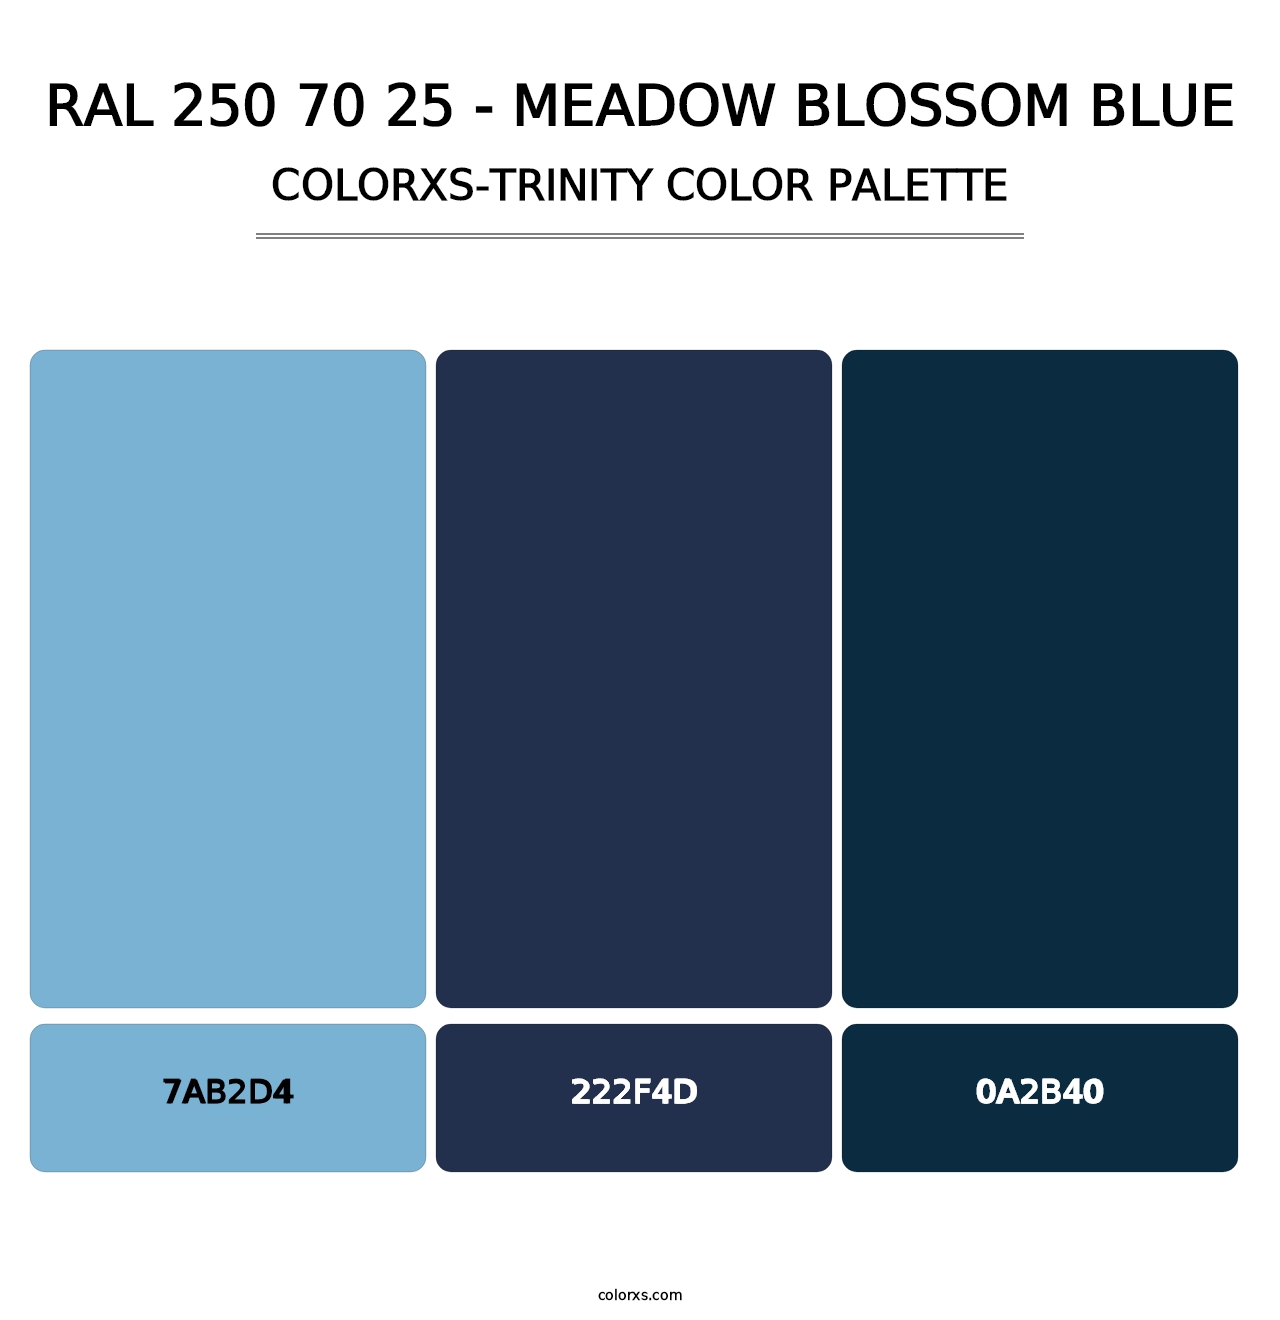 RAL 250 70 25 - Meadow Blossom Blue - Colorxs Trinity Palette